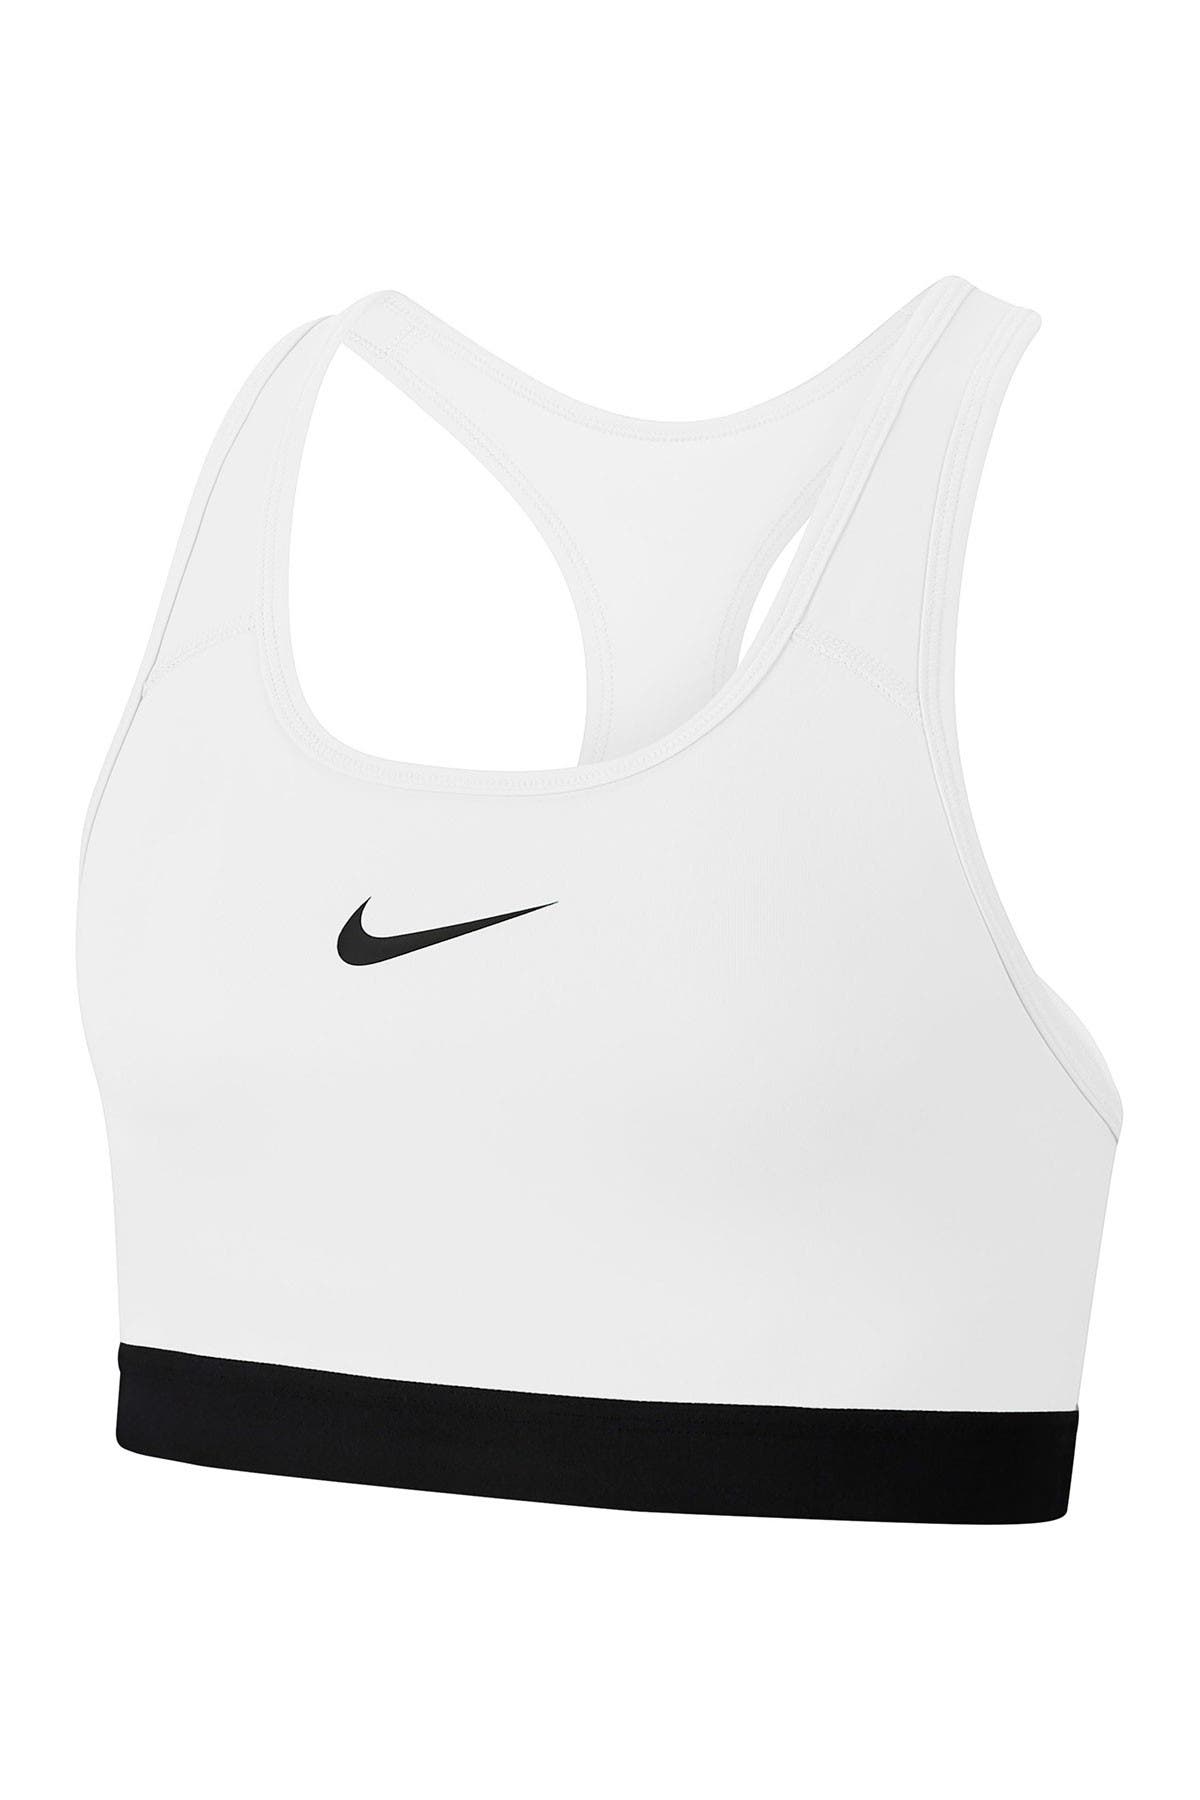 Nike Swoosh Logo Racerback Sports Bra In White/black | ModeSens